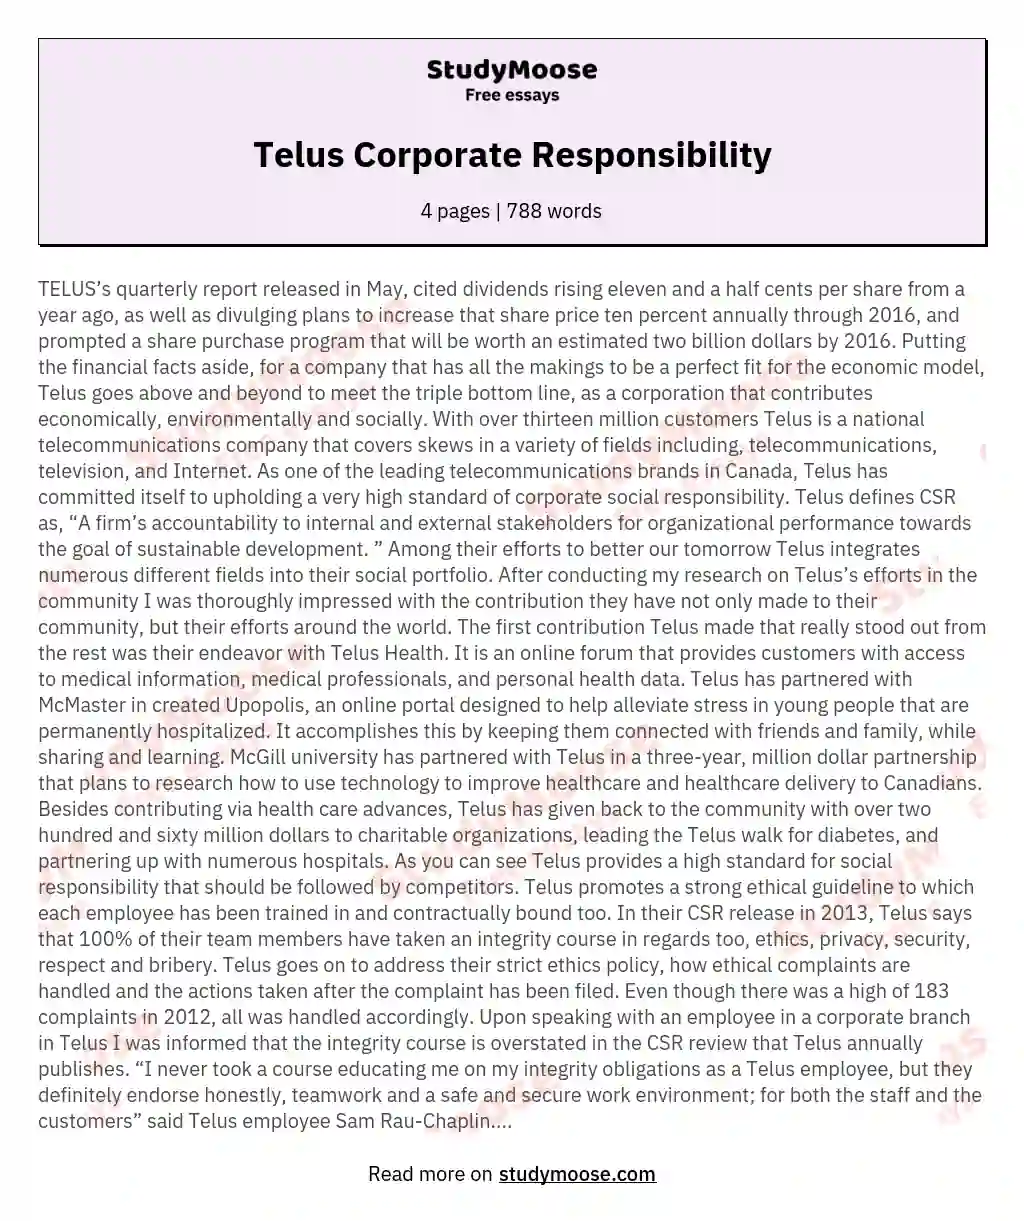 Telus Corporate Responsibility essay